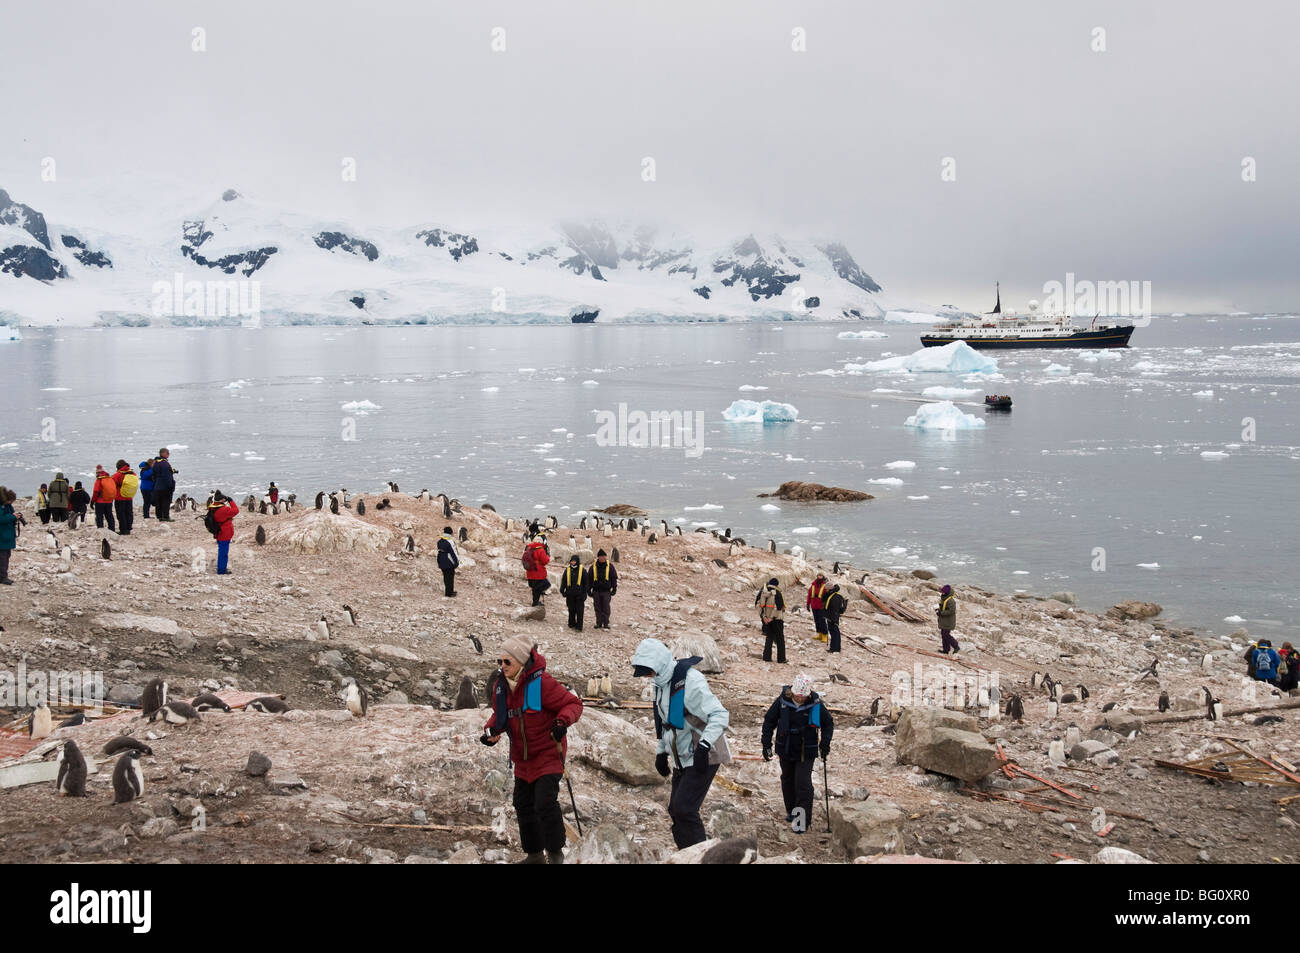 Touristen und Gentoo Penguins, Neko Harbour, antarktische Halbinsel, Antarktis, Polarregionen Stockfoto